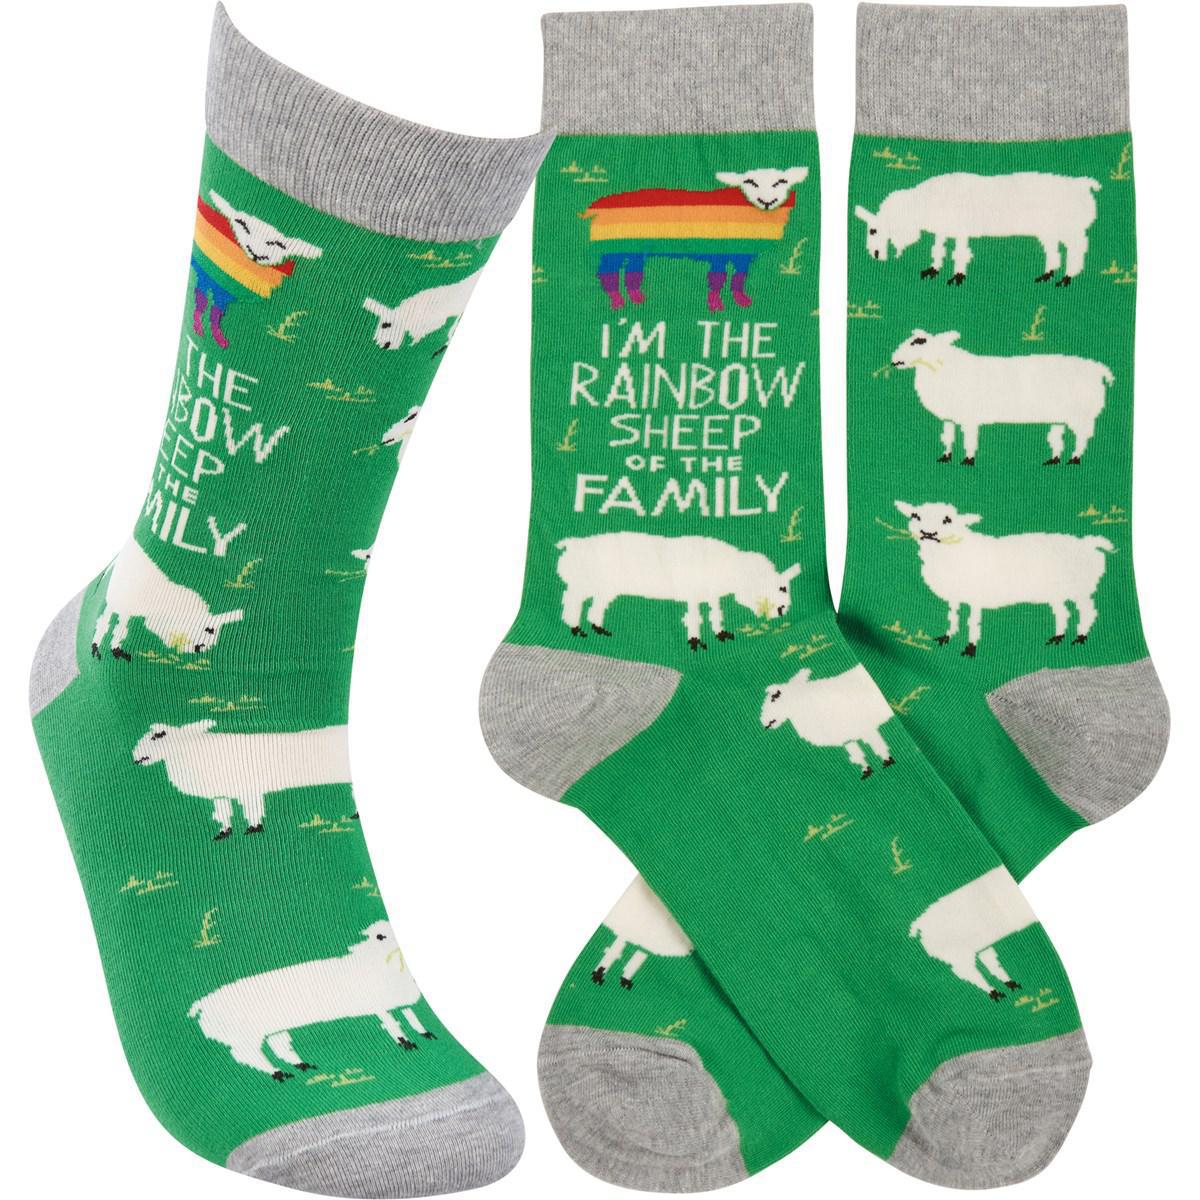 Rainbow Sheep In The Family Socks